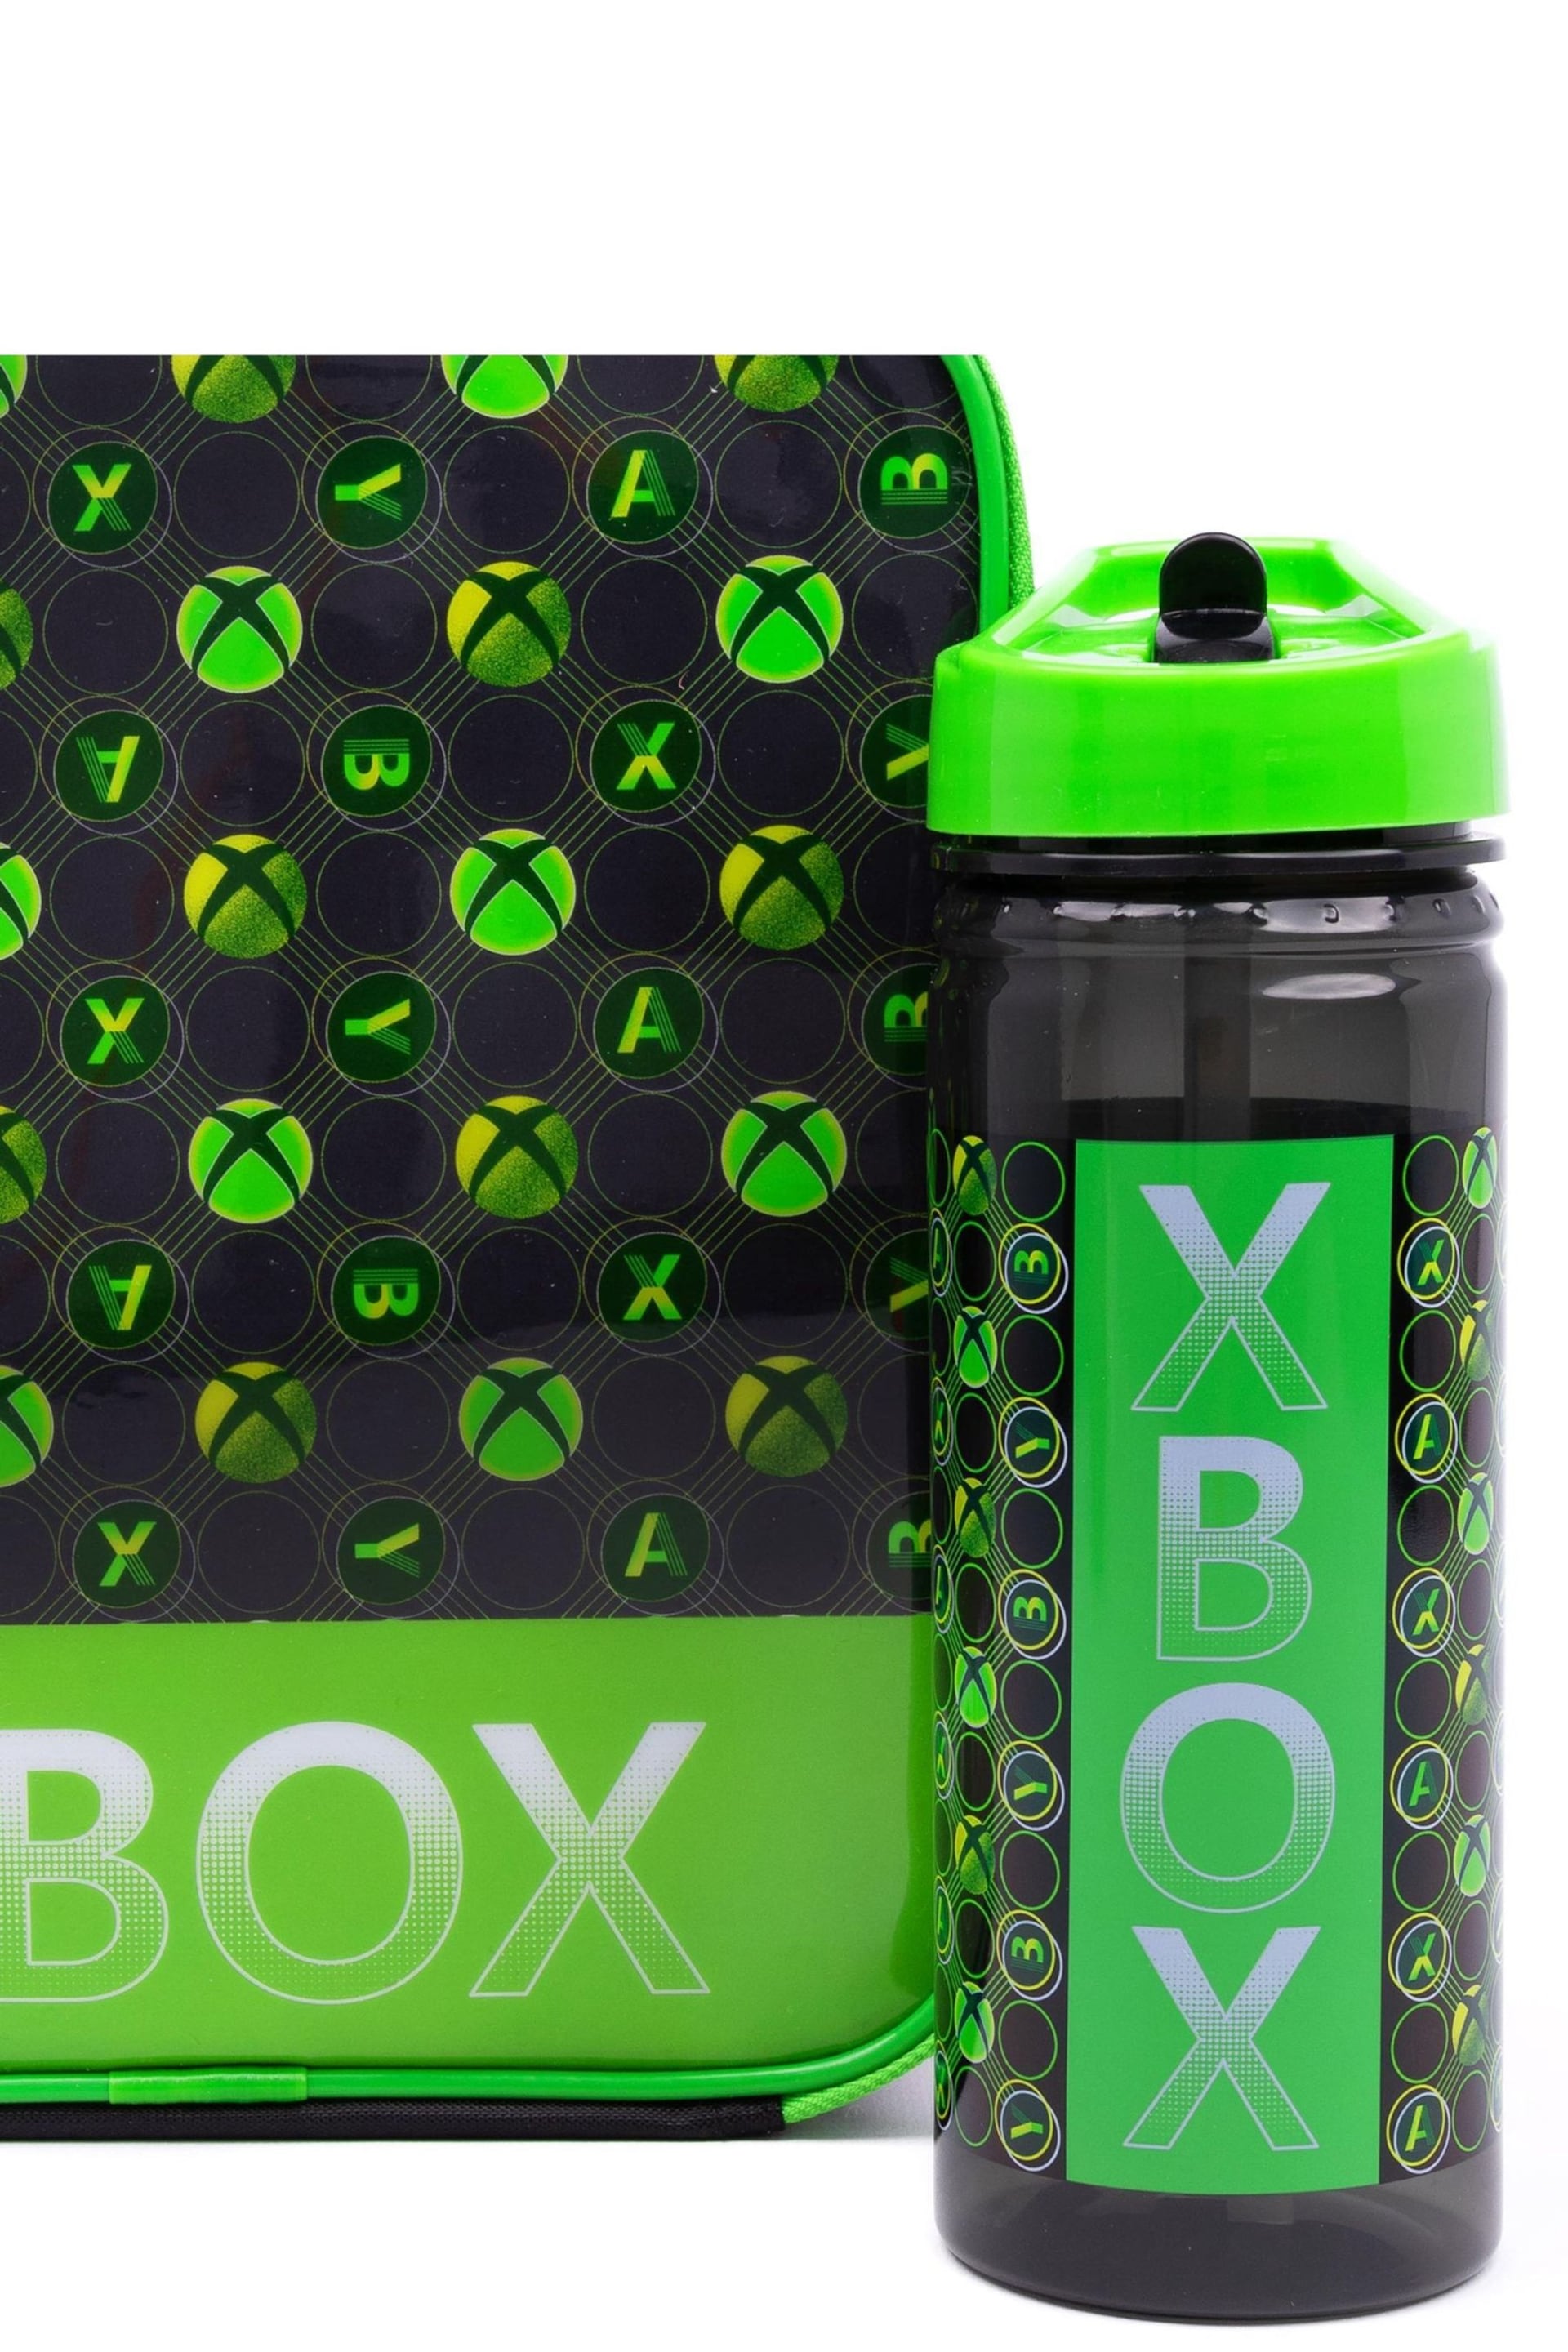 Vanilla Underground Green Xbox Licensing Gaming Lunch Box Set - Image 2 of 4